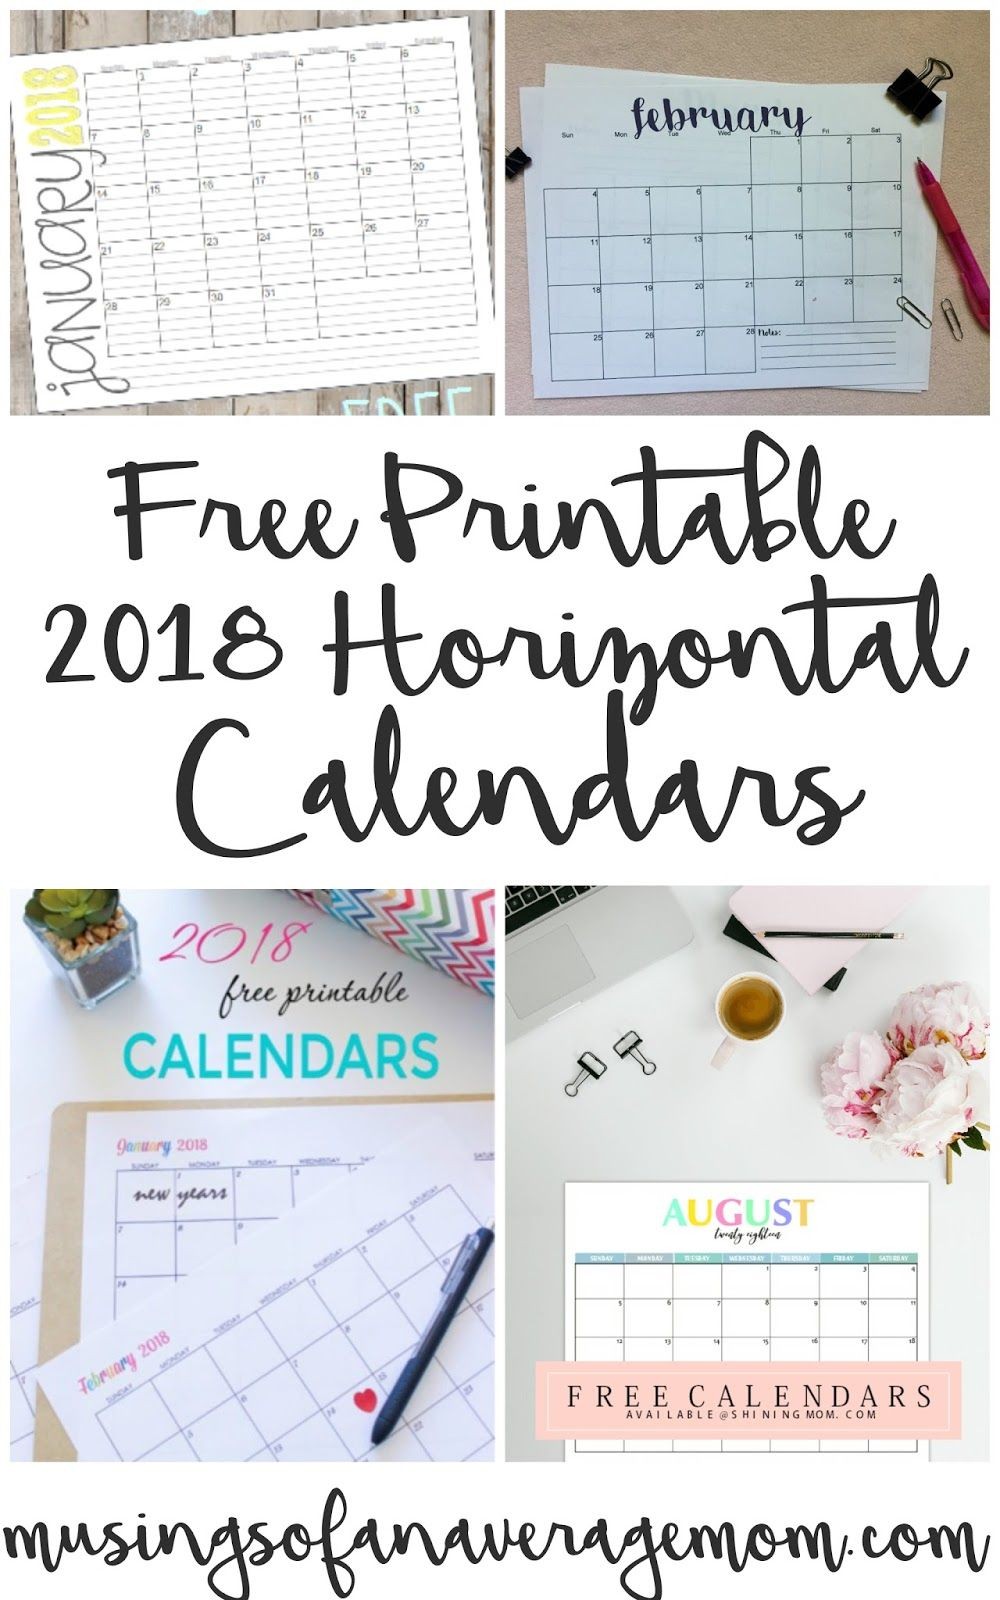 2018 free monthly calendar Bts Pinterest